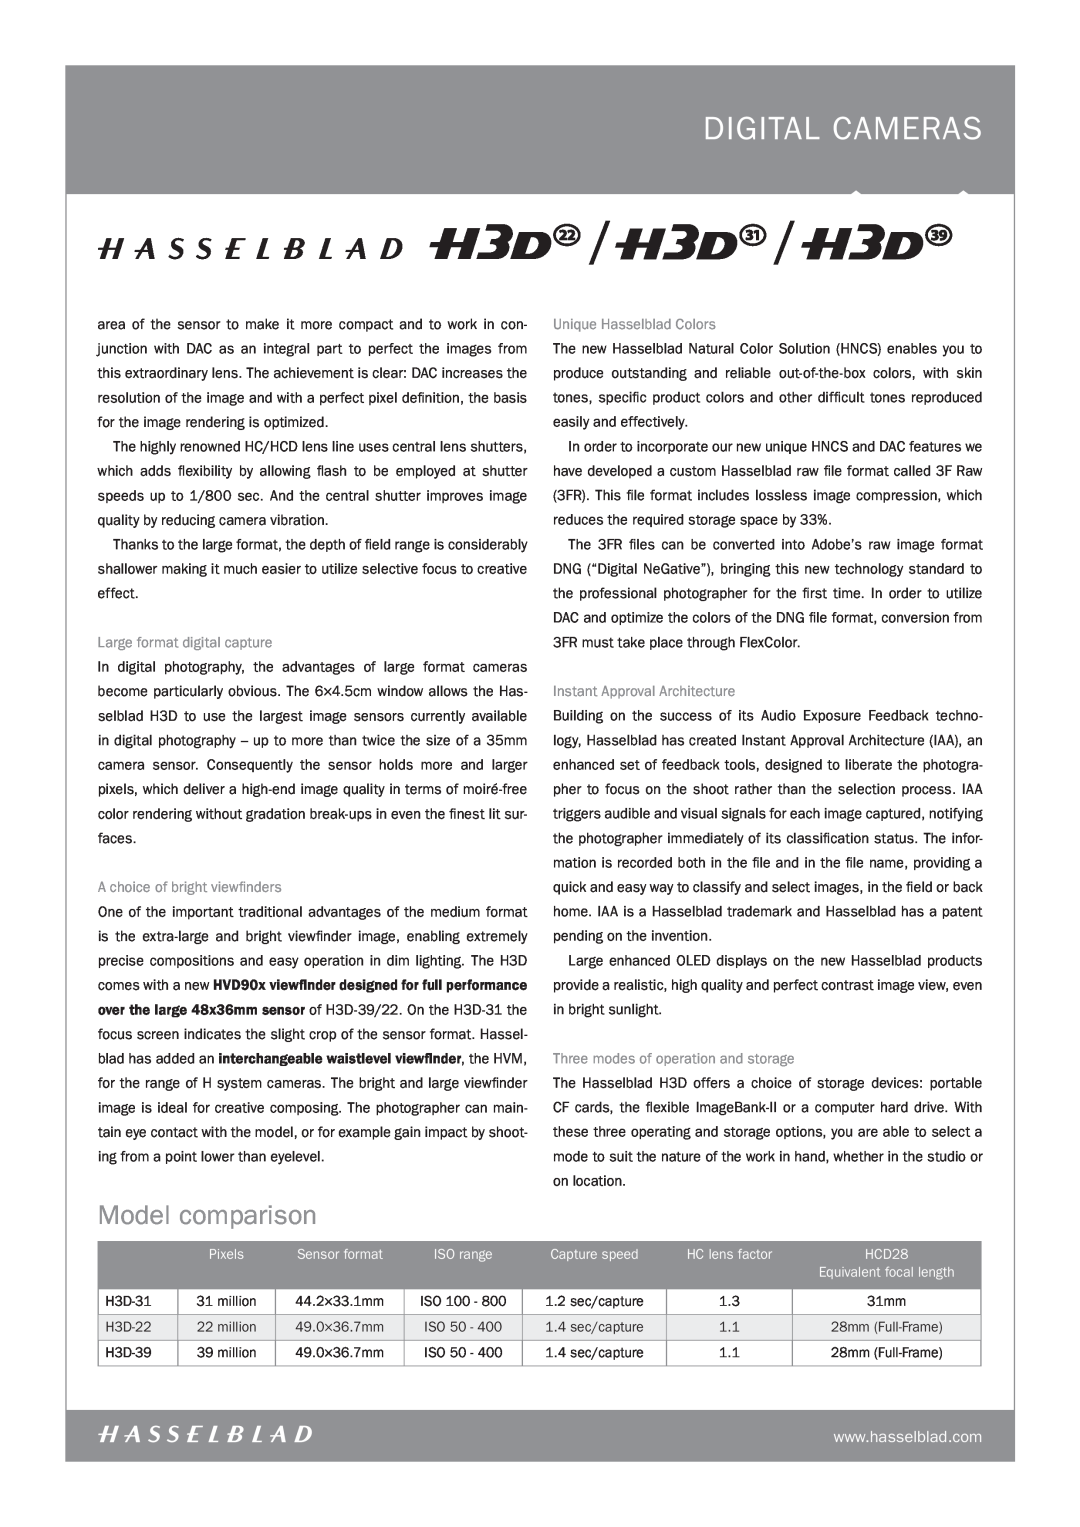 Hasselblad H3D-22, H3D-31 manual Model comparison, Pixels, Sensor format, ISO range, Capture speed, HC lens factor, HCD28 